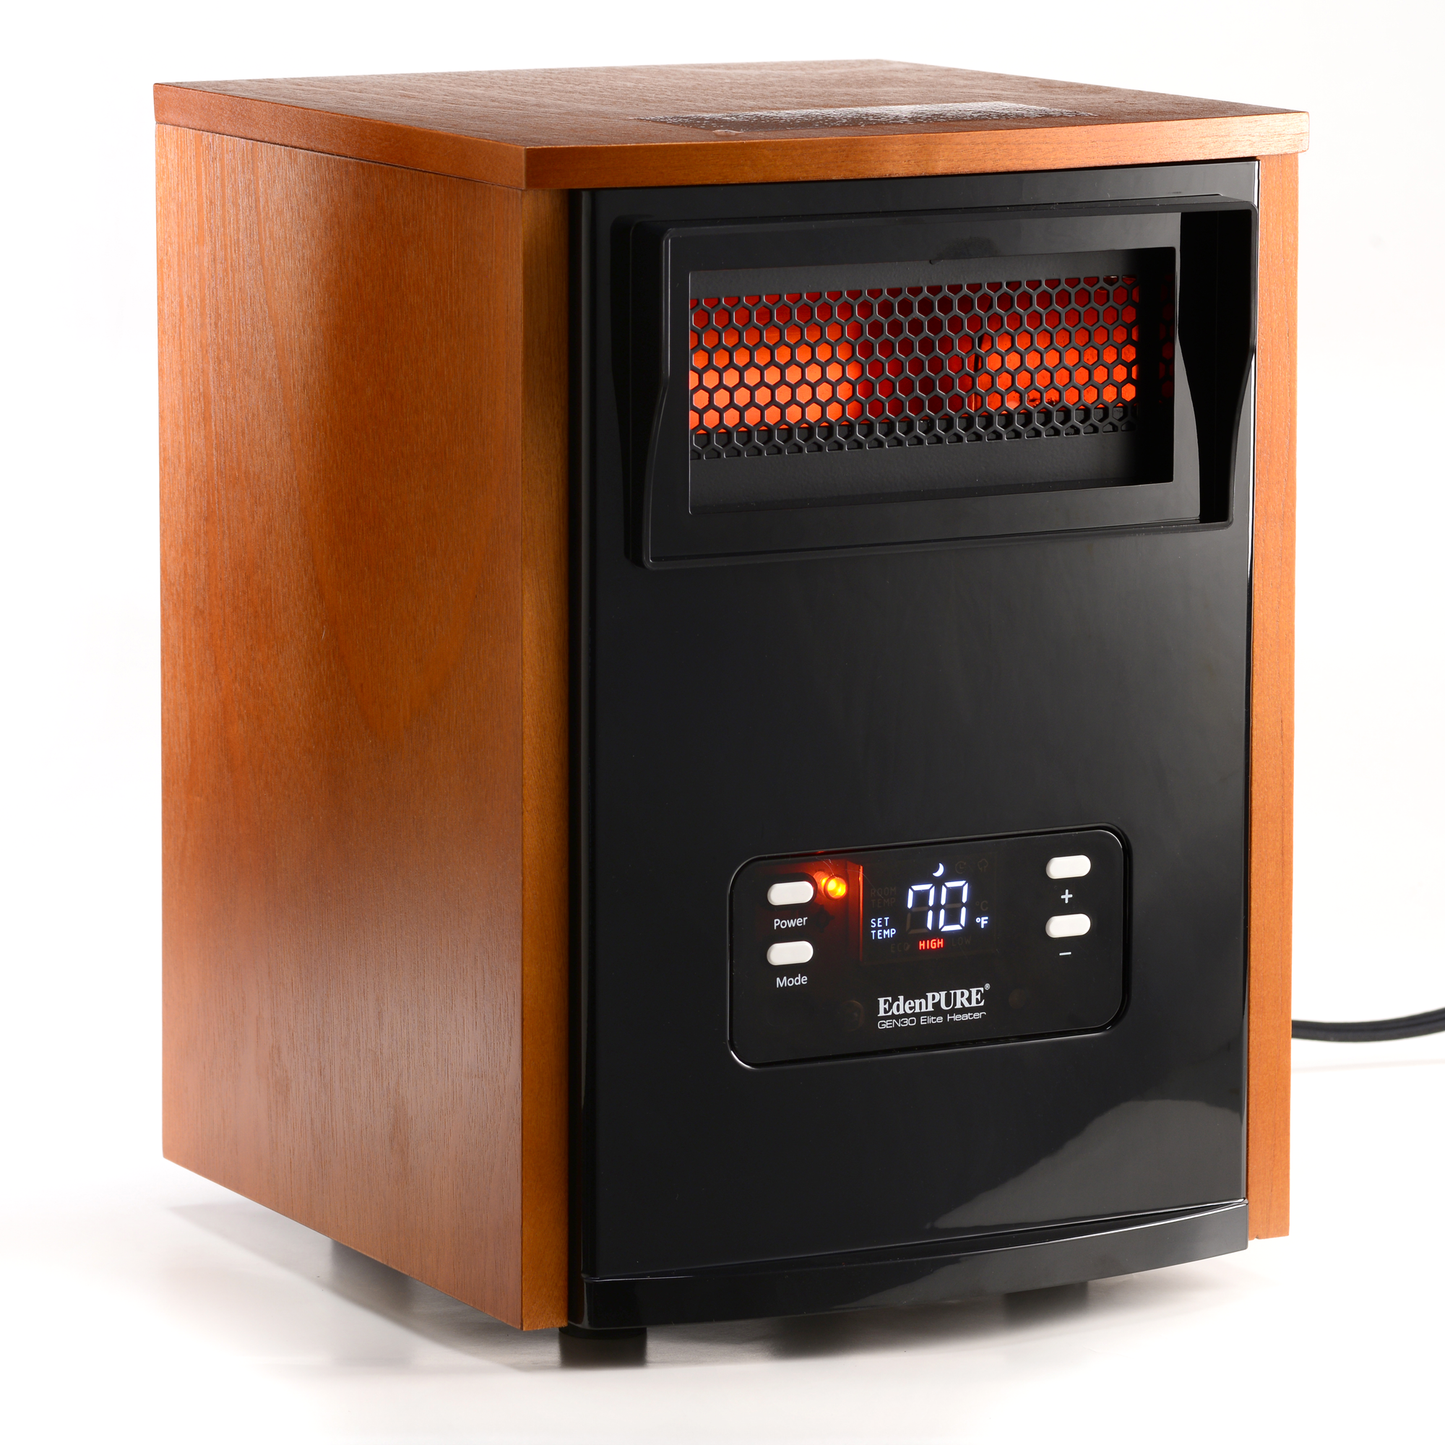 EdenPURE® GEN30 Elite Infrared Heater - Refurbished